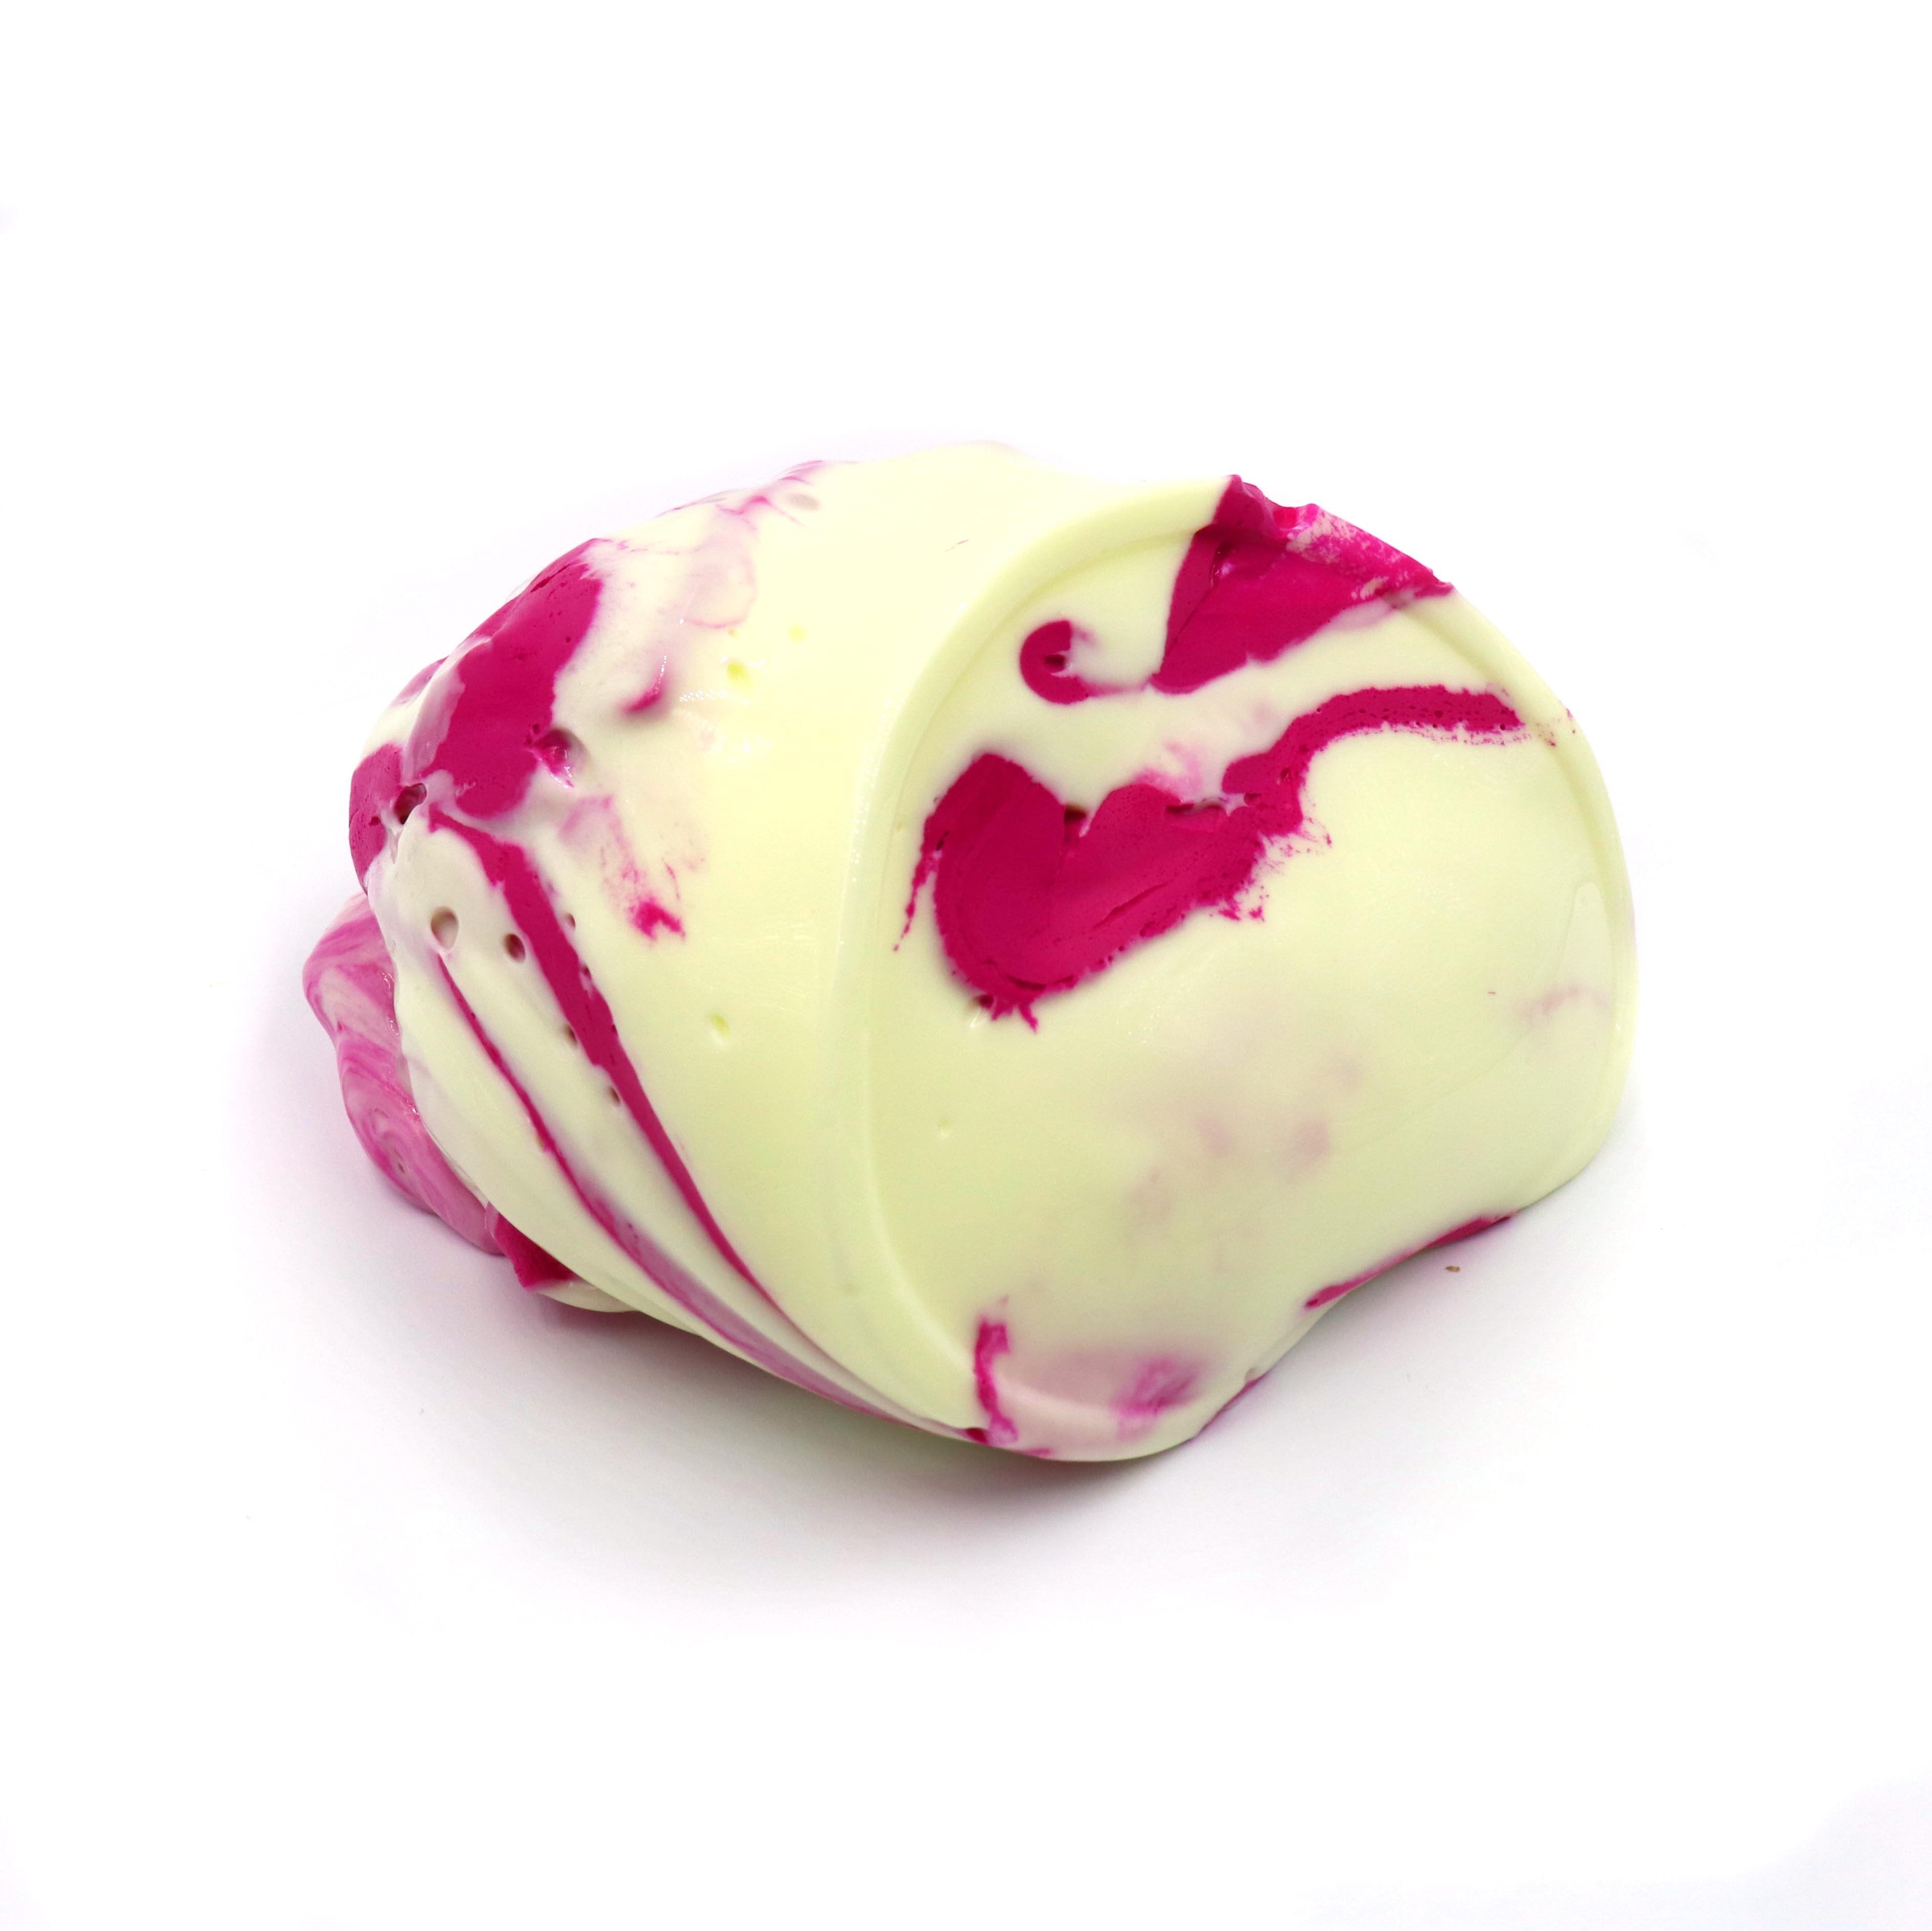 Raspberry Swirl Pudding Glossy Clay Slime